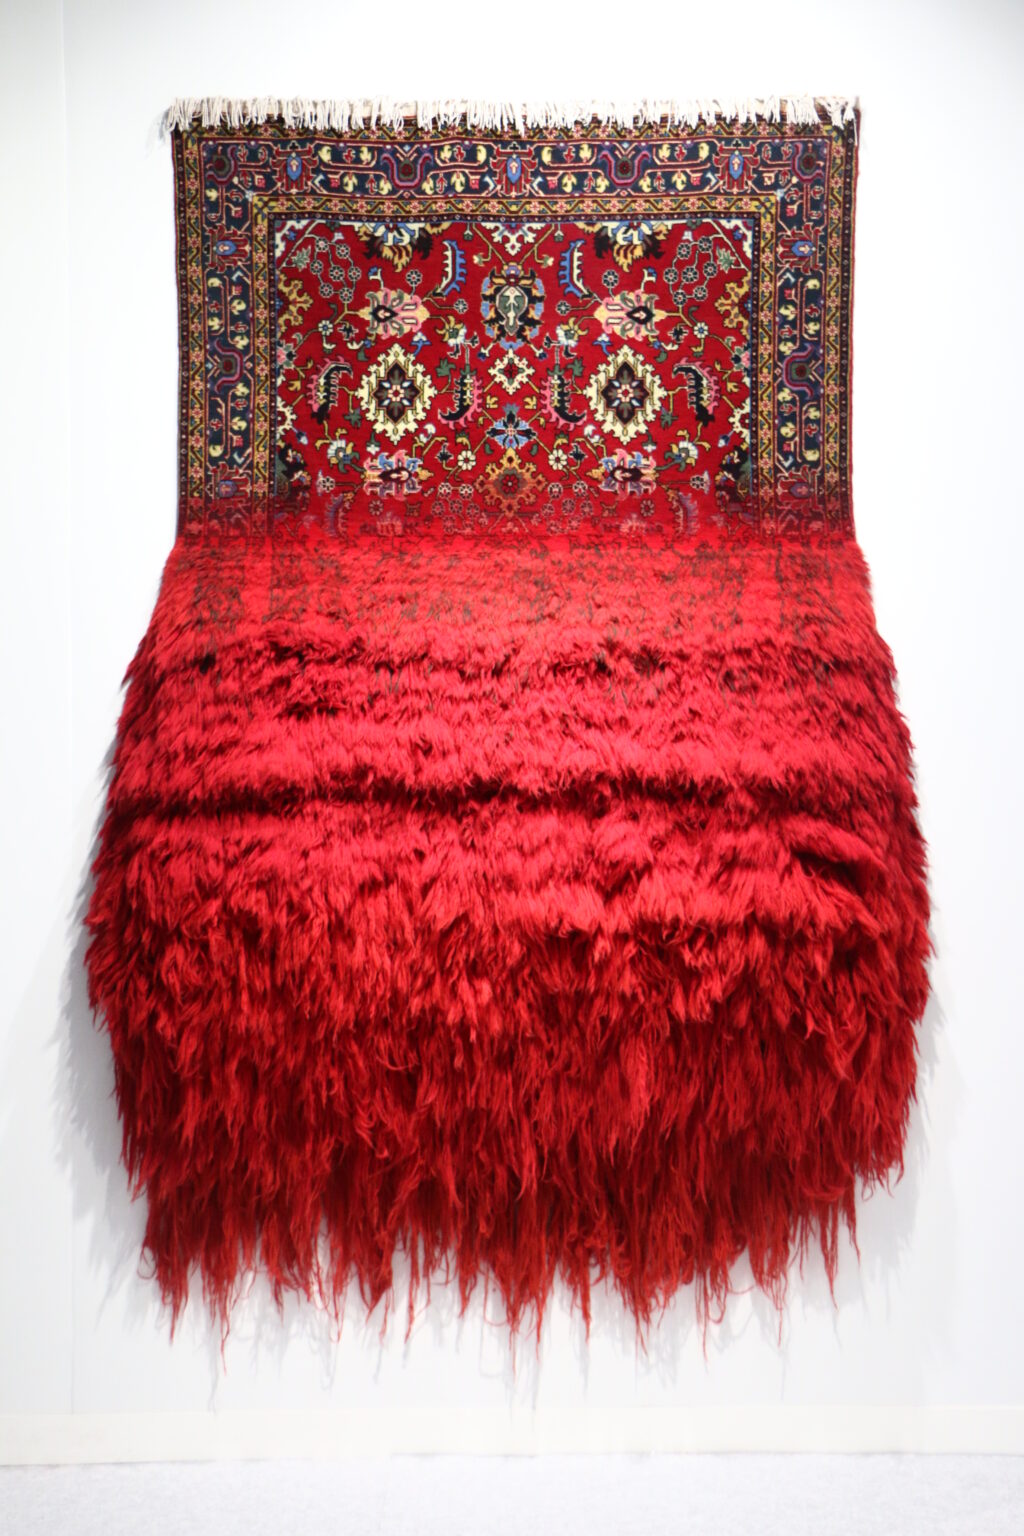 Faig Ahmed. Virgin, 2016. Handmade wool carpet. Edition 1 of 3.